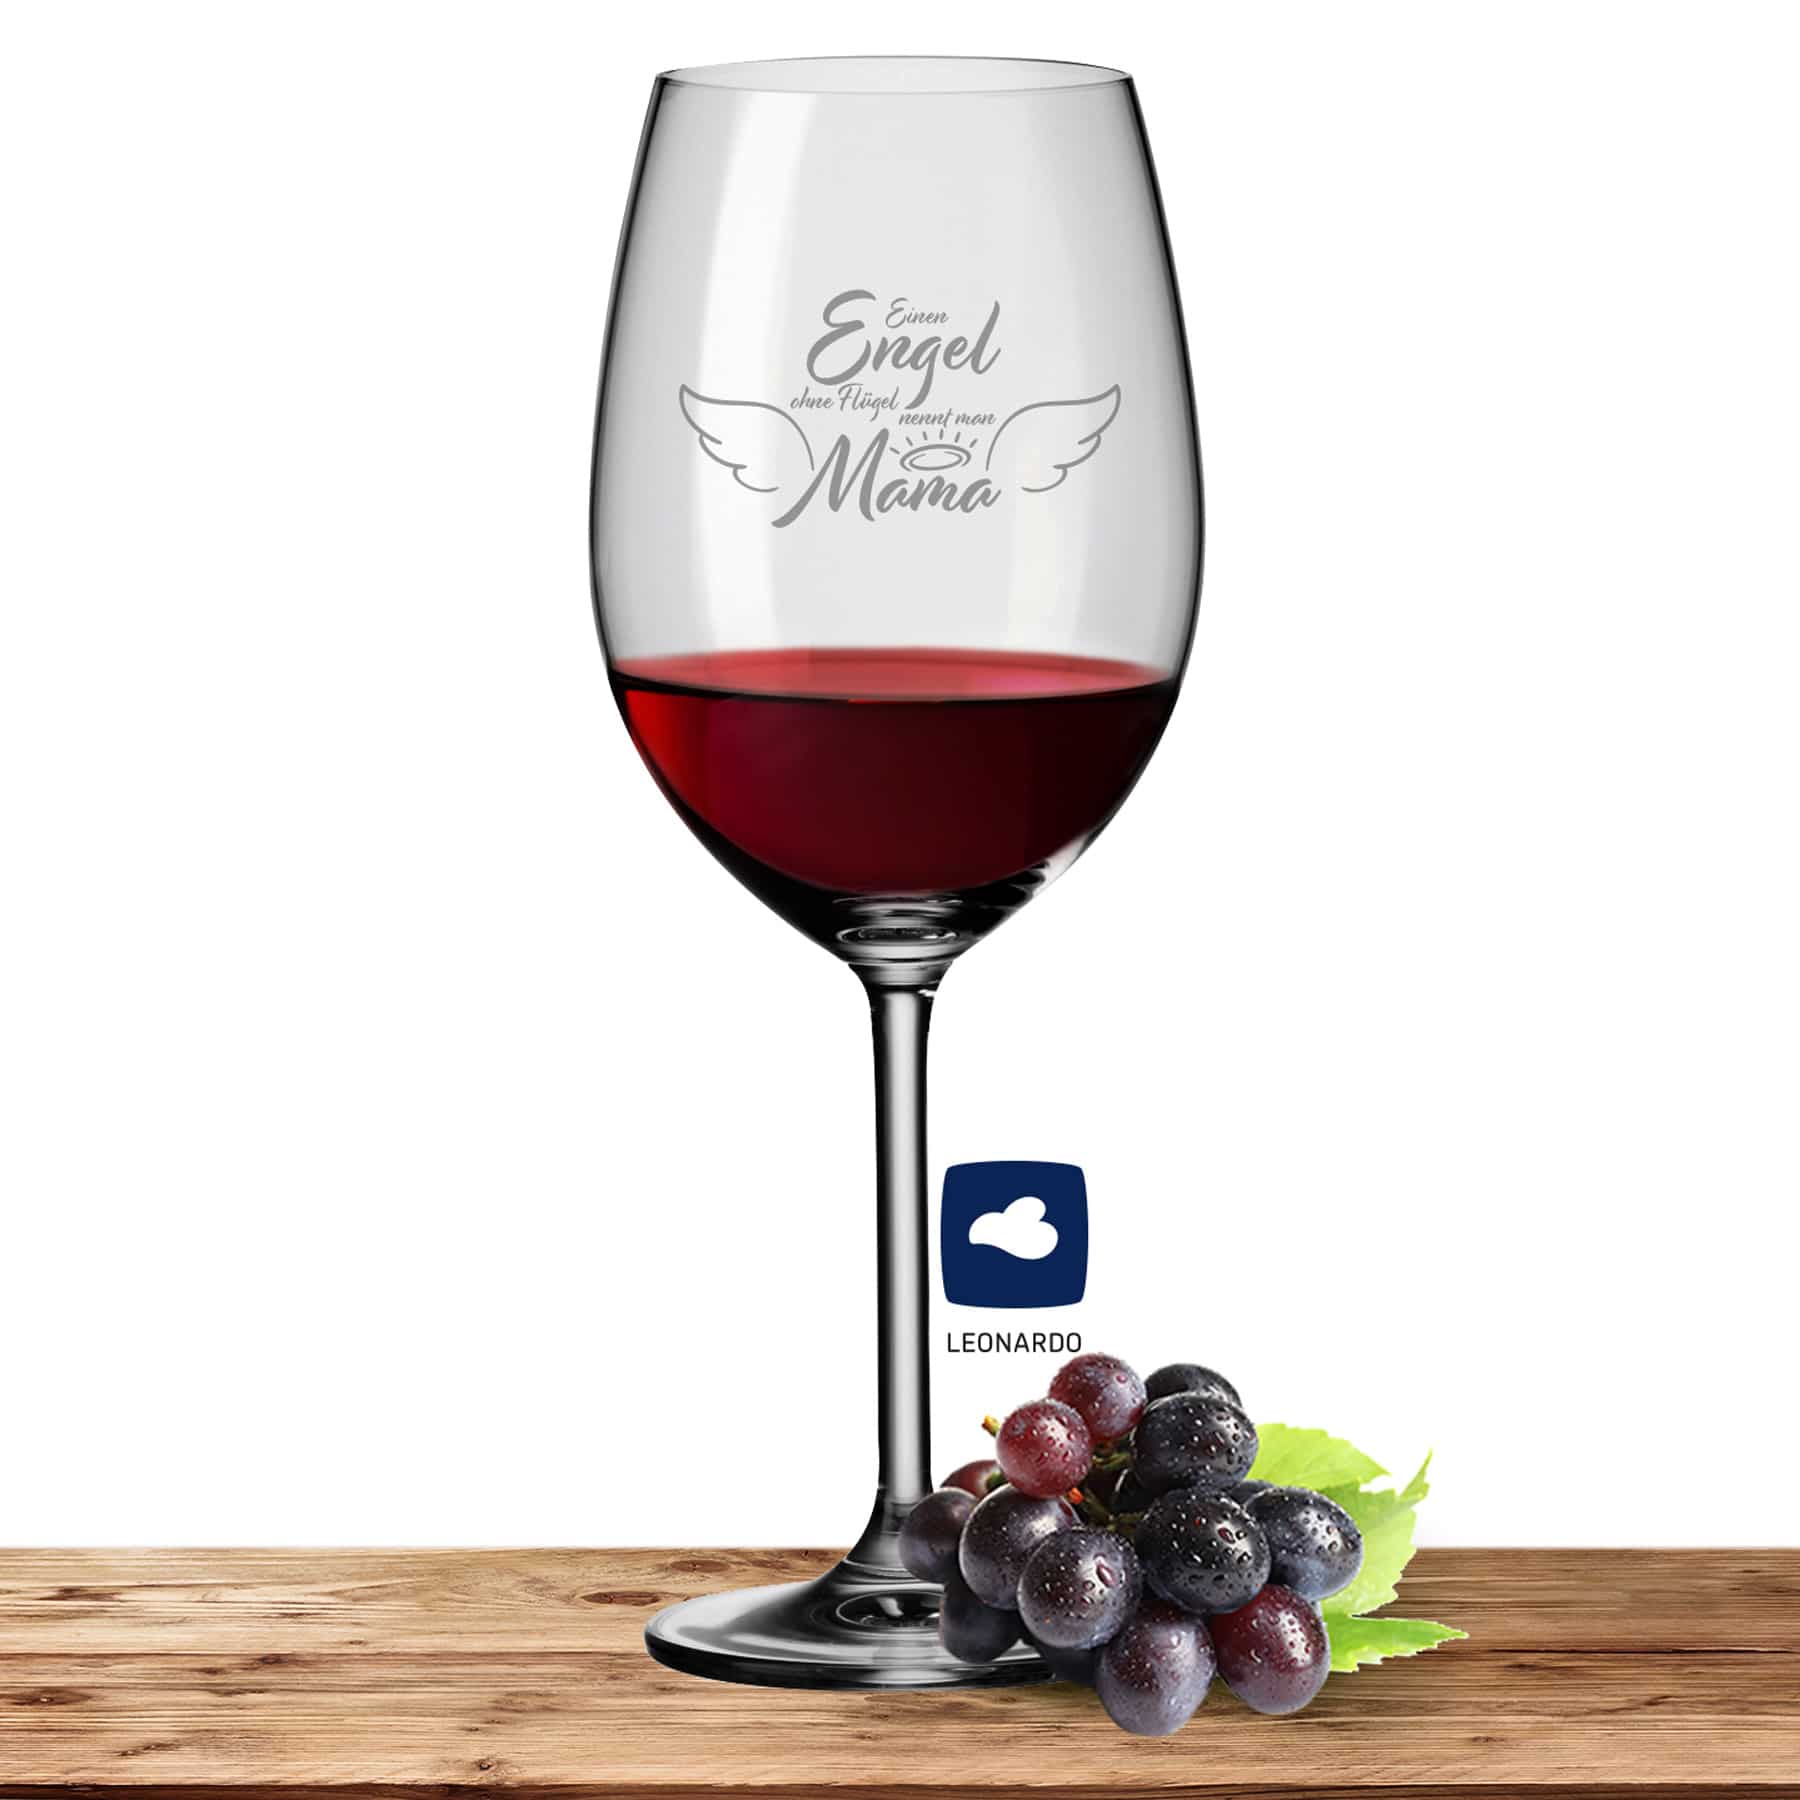 Leonardo Bordeauxglas Rotweinglas DAILY 640ml graviert (Engel Mama)